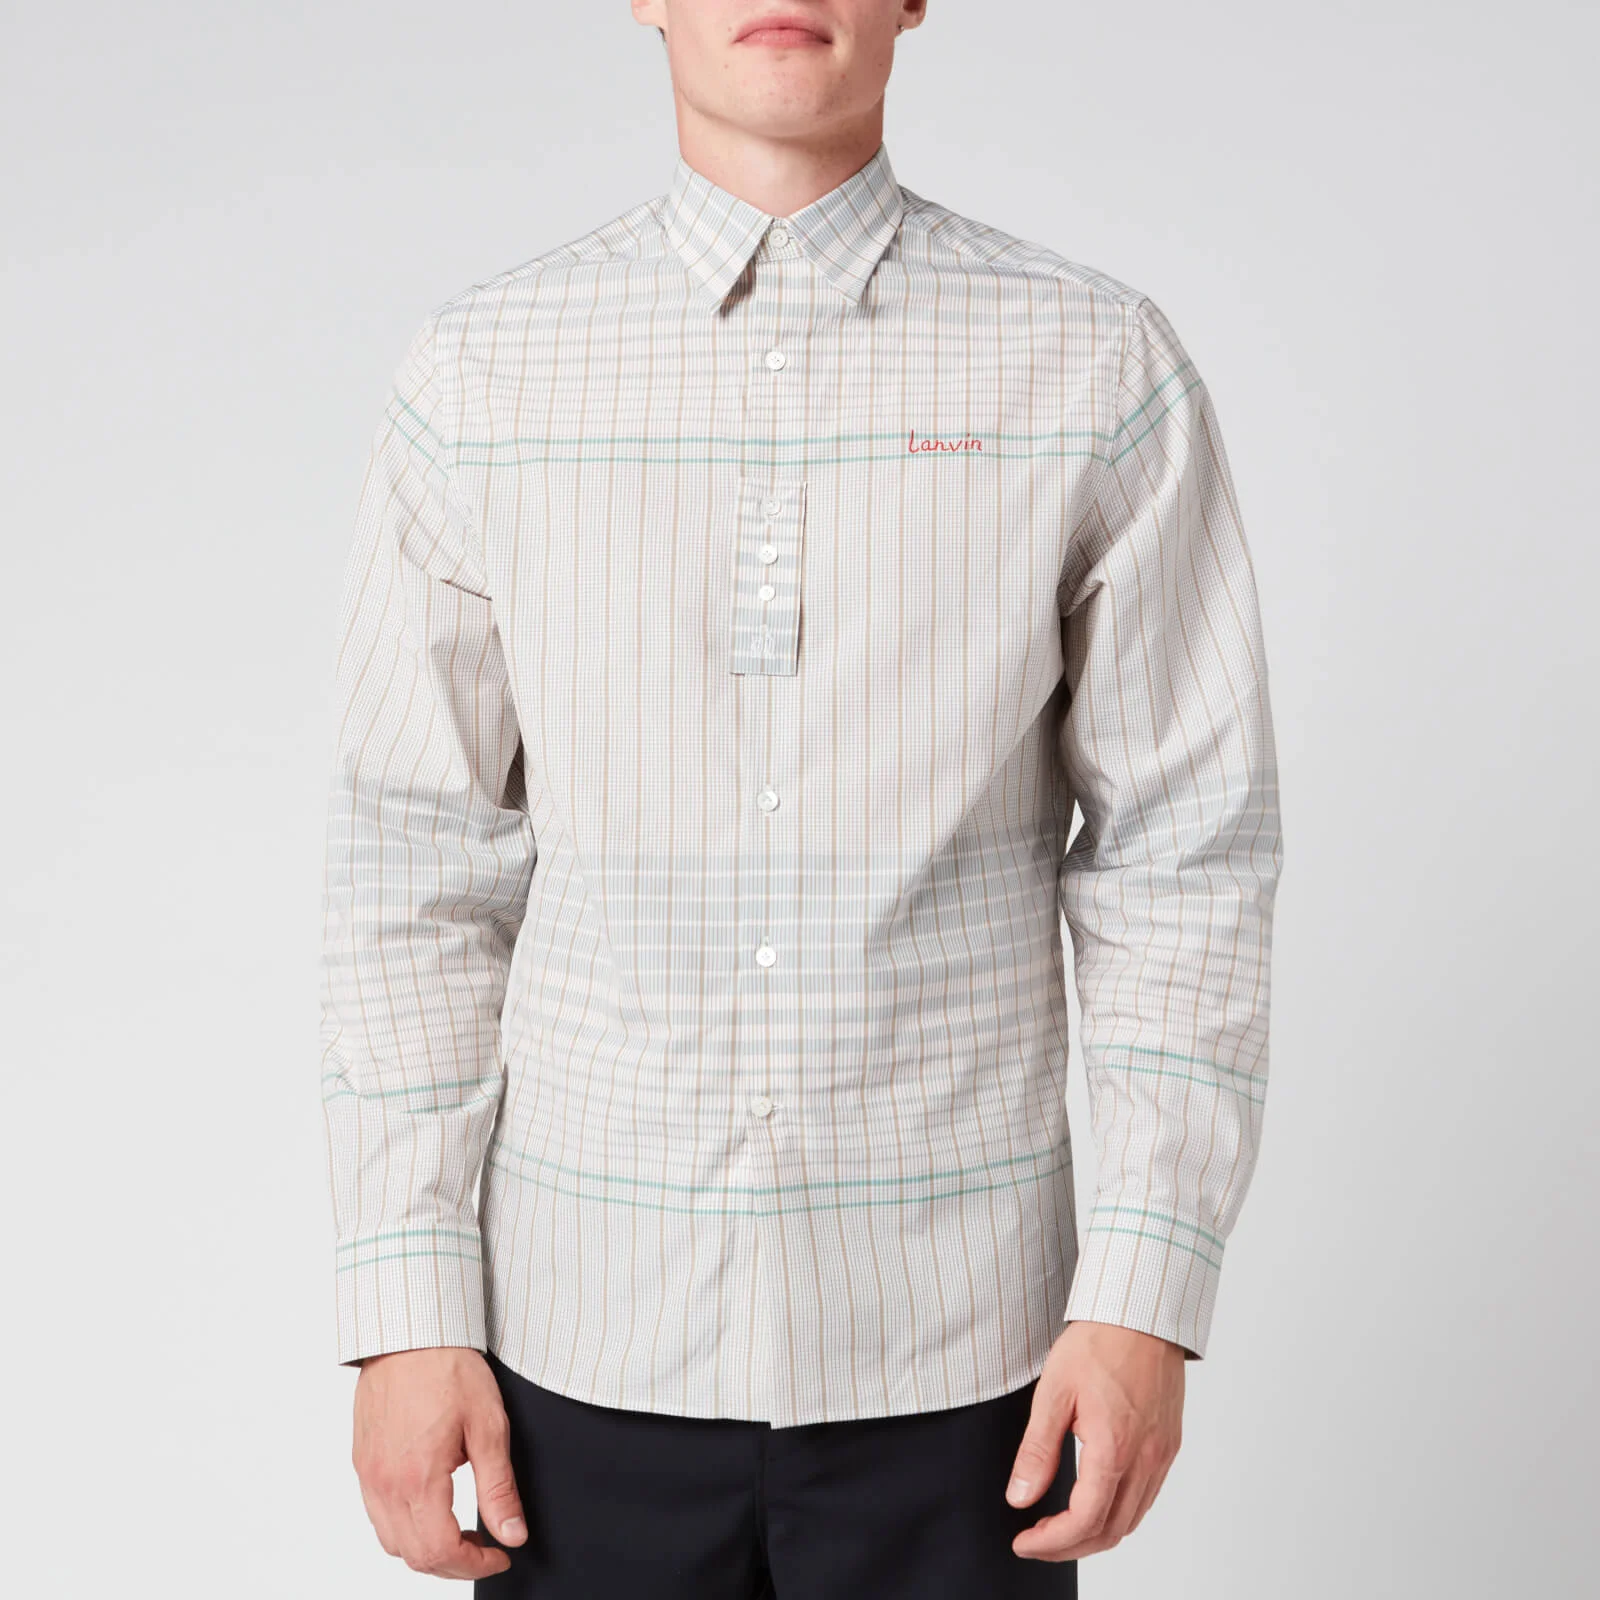 Lanvin Men's Checkered Shirt - Blue/Green Image 1